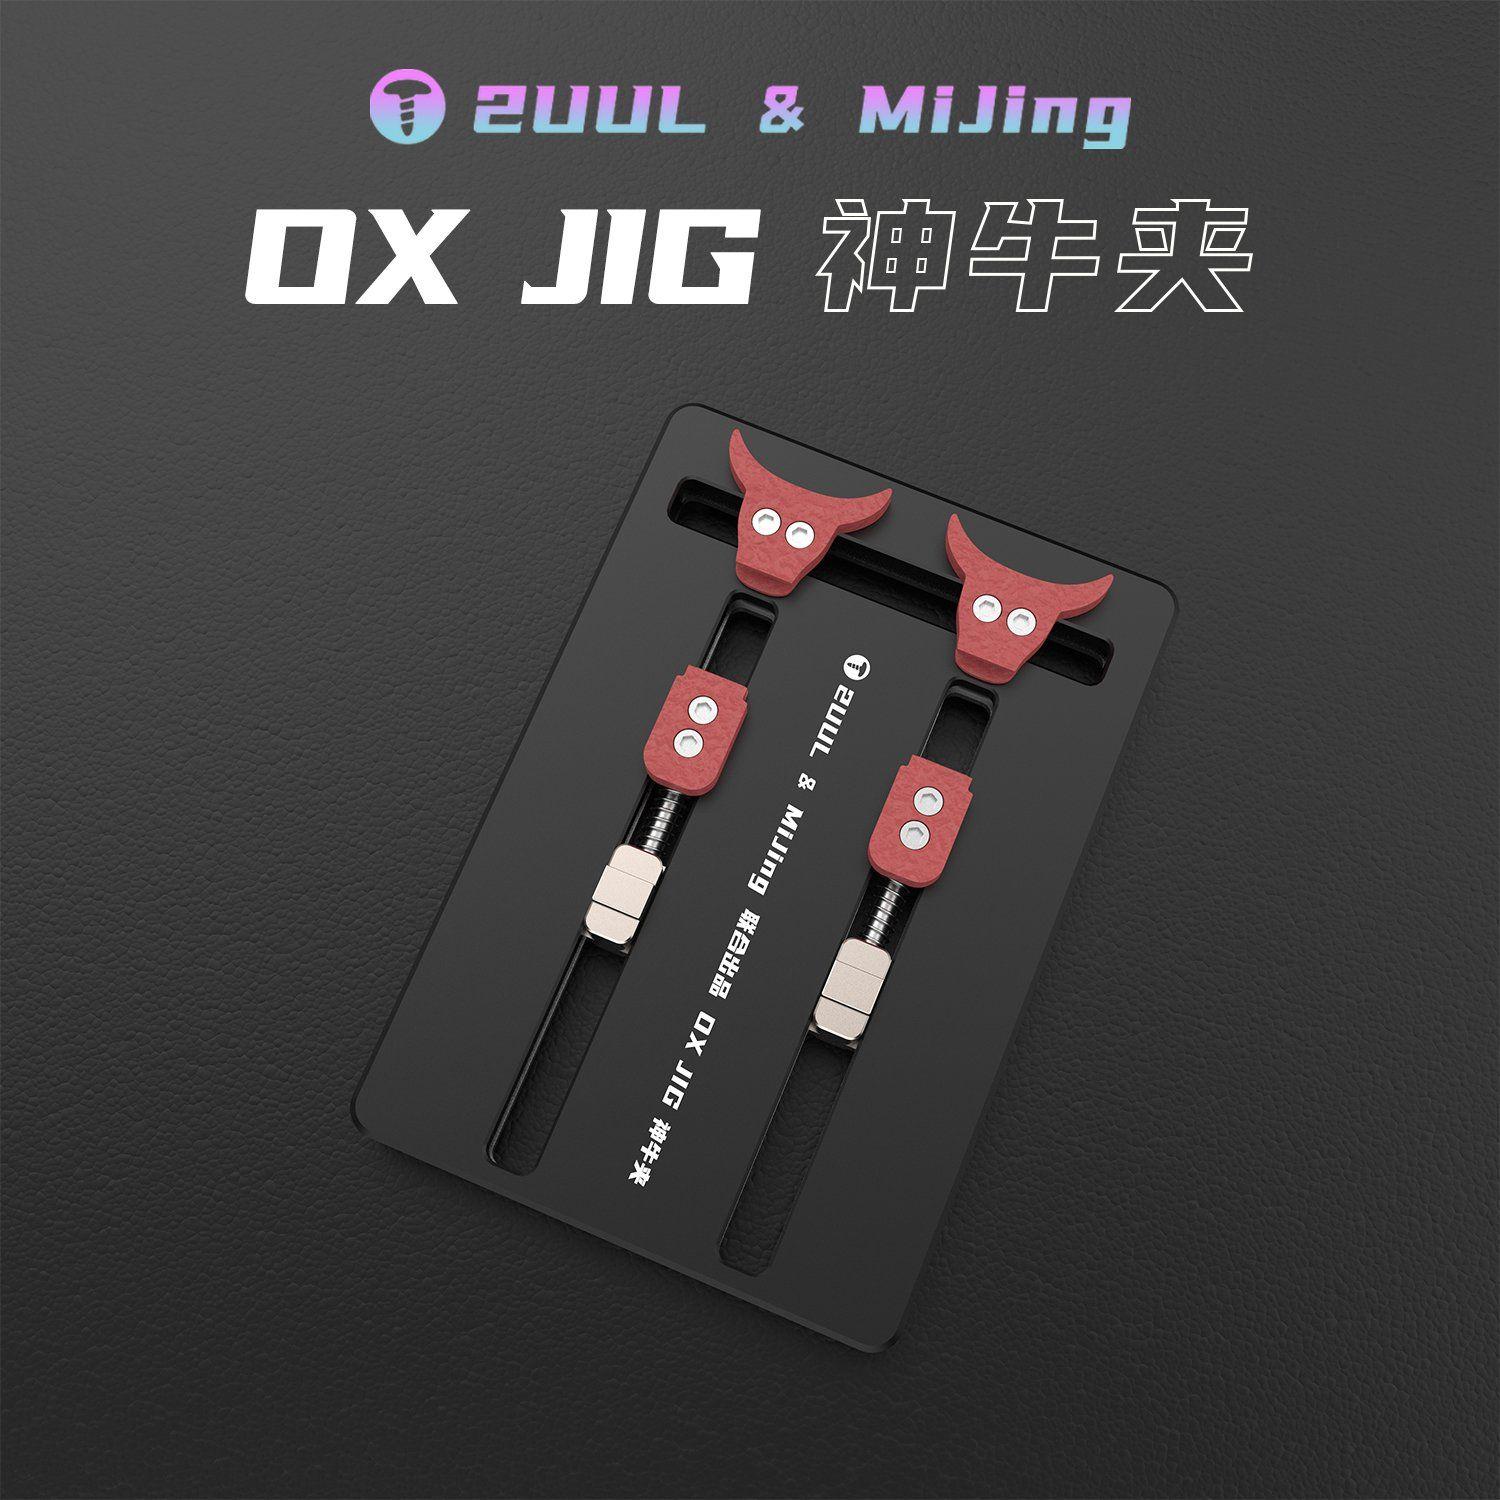 Multifunctional PCB Board Holder 2uuL & MiJing OX JIG